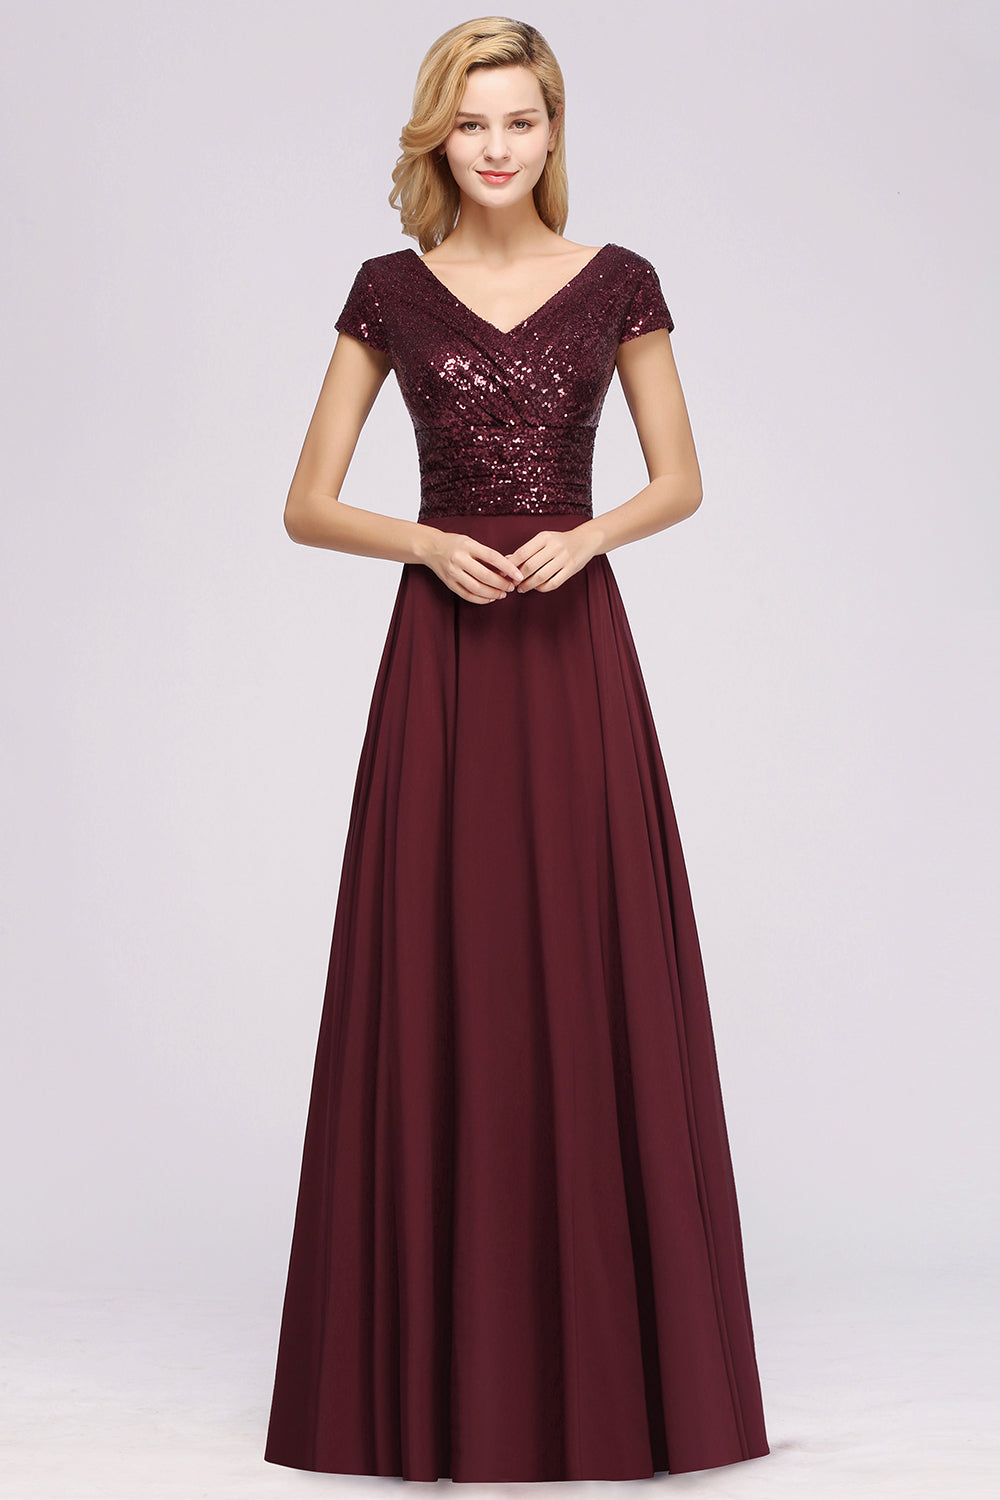 Chic Sequined Top V-Neck Sleeveless Burgundy Bridesmaid Dresses Online-27dress